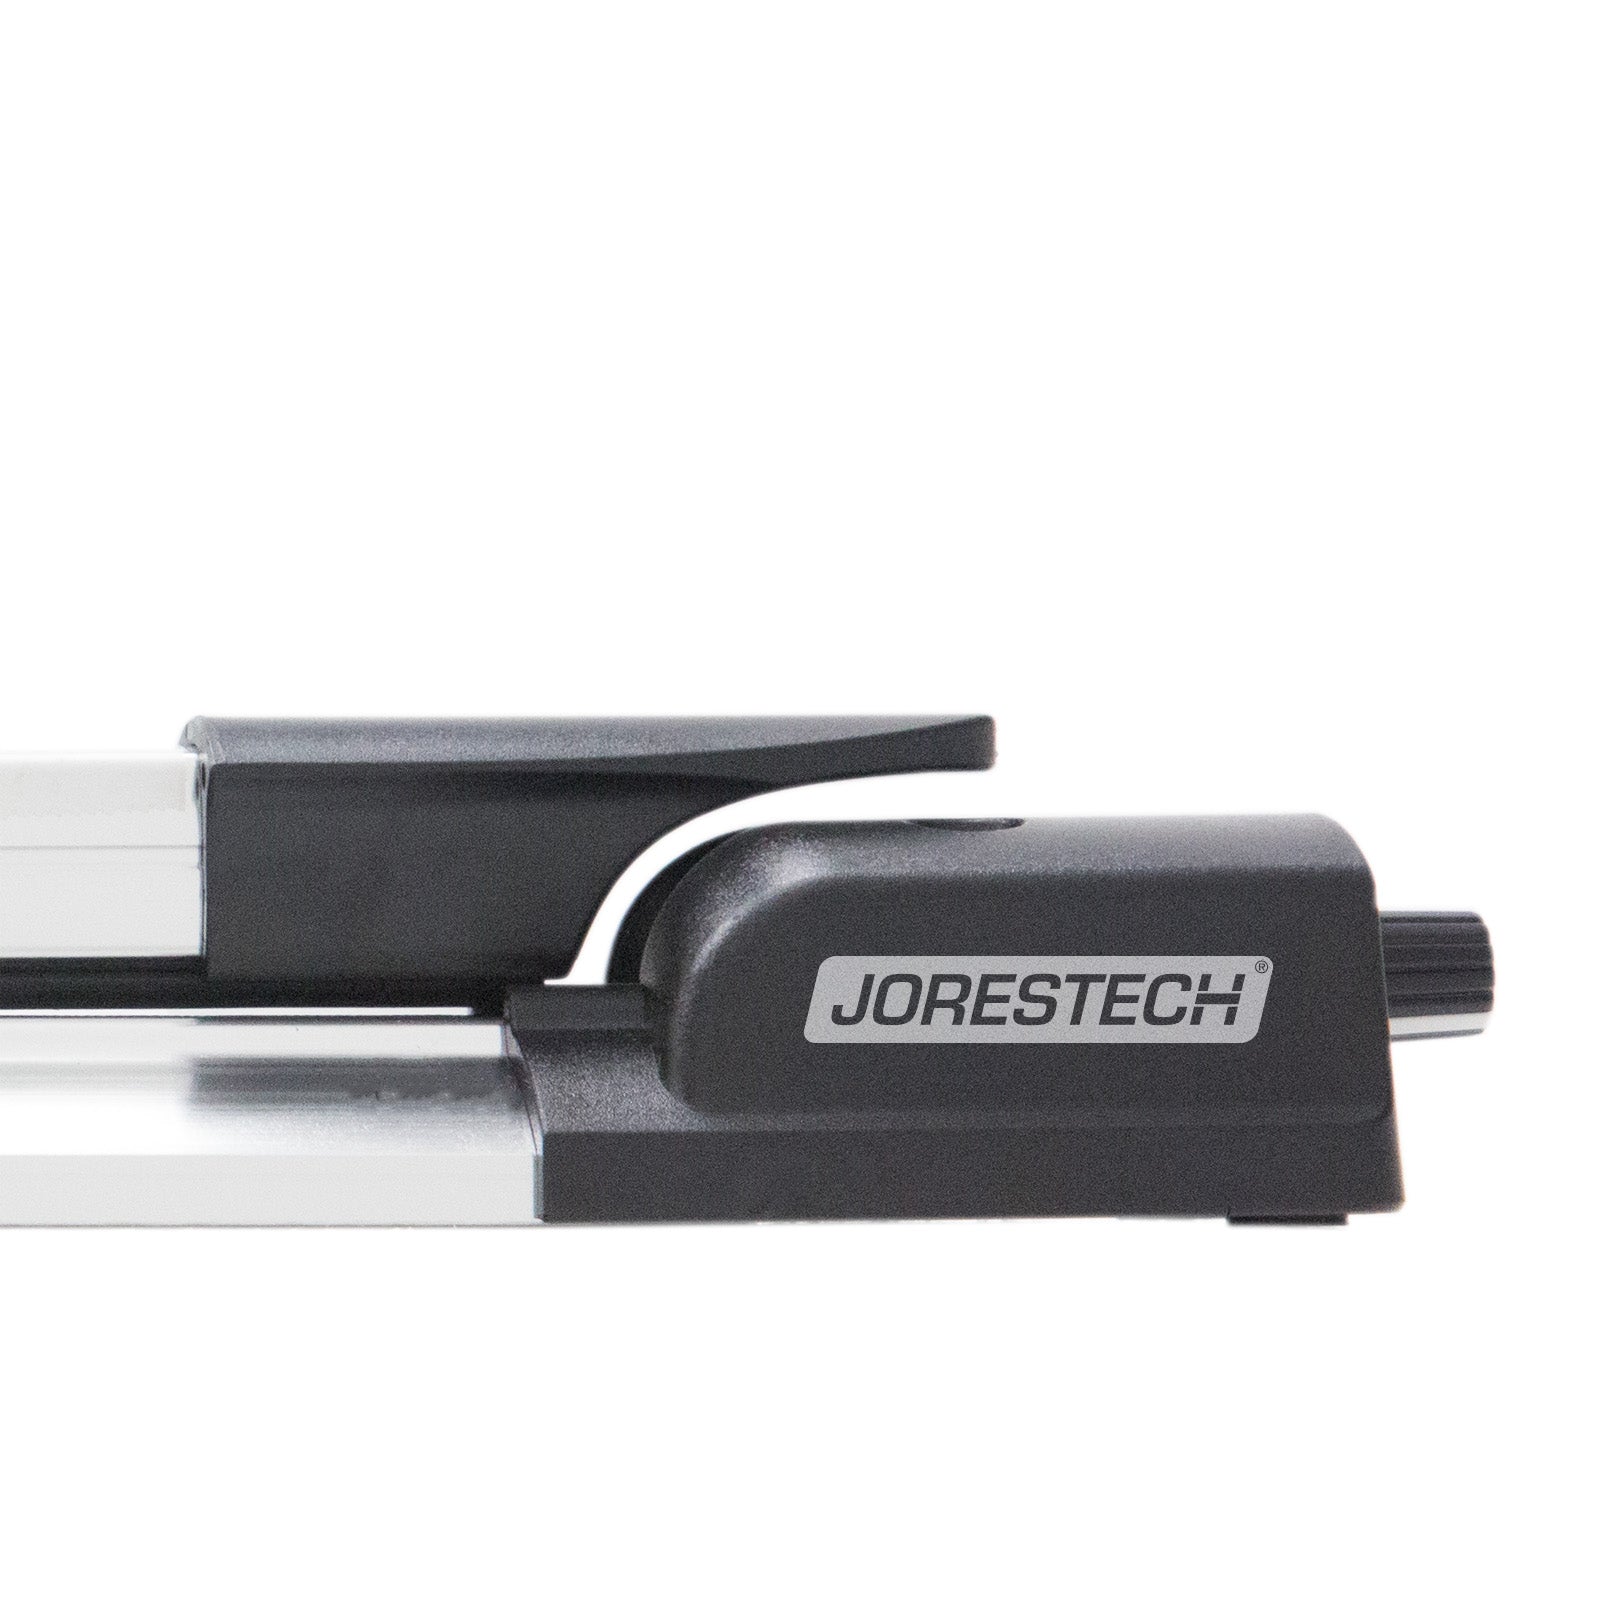 JORESTECH 12 Bag Sealer Impulse Manual Sealer with Cutter E-MMS-300C